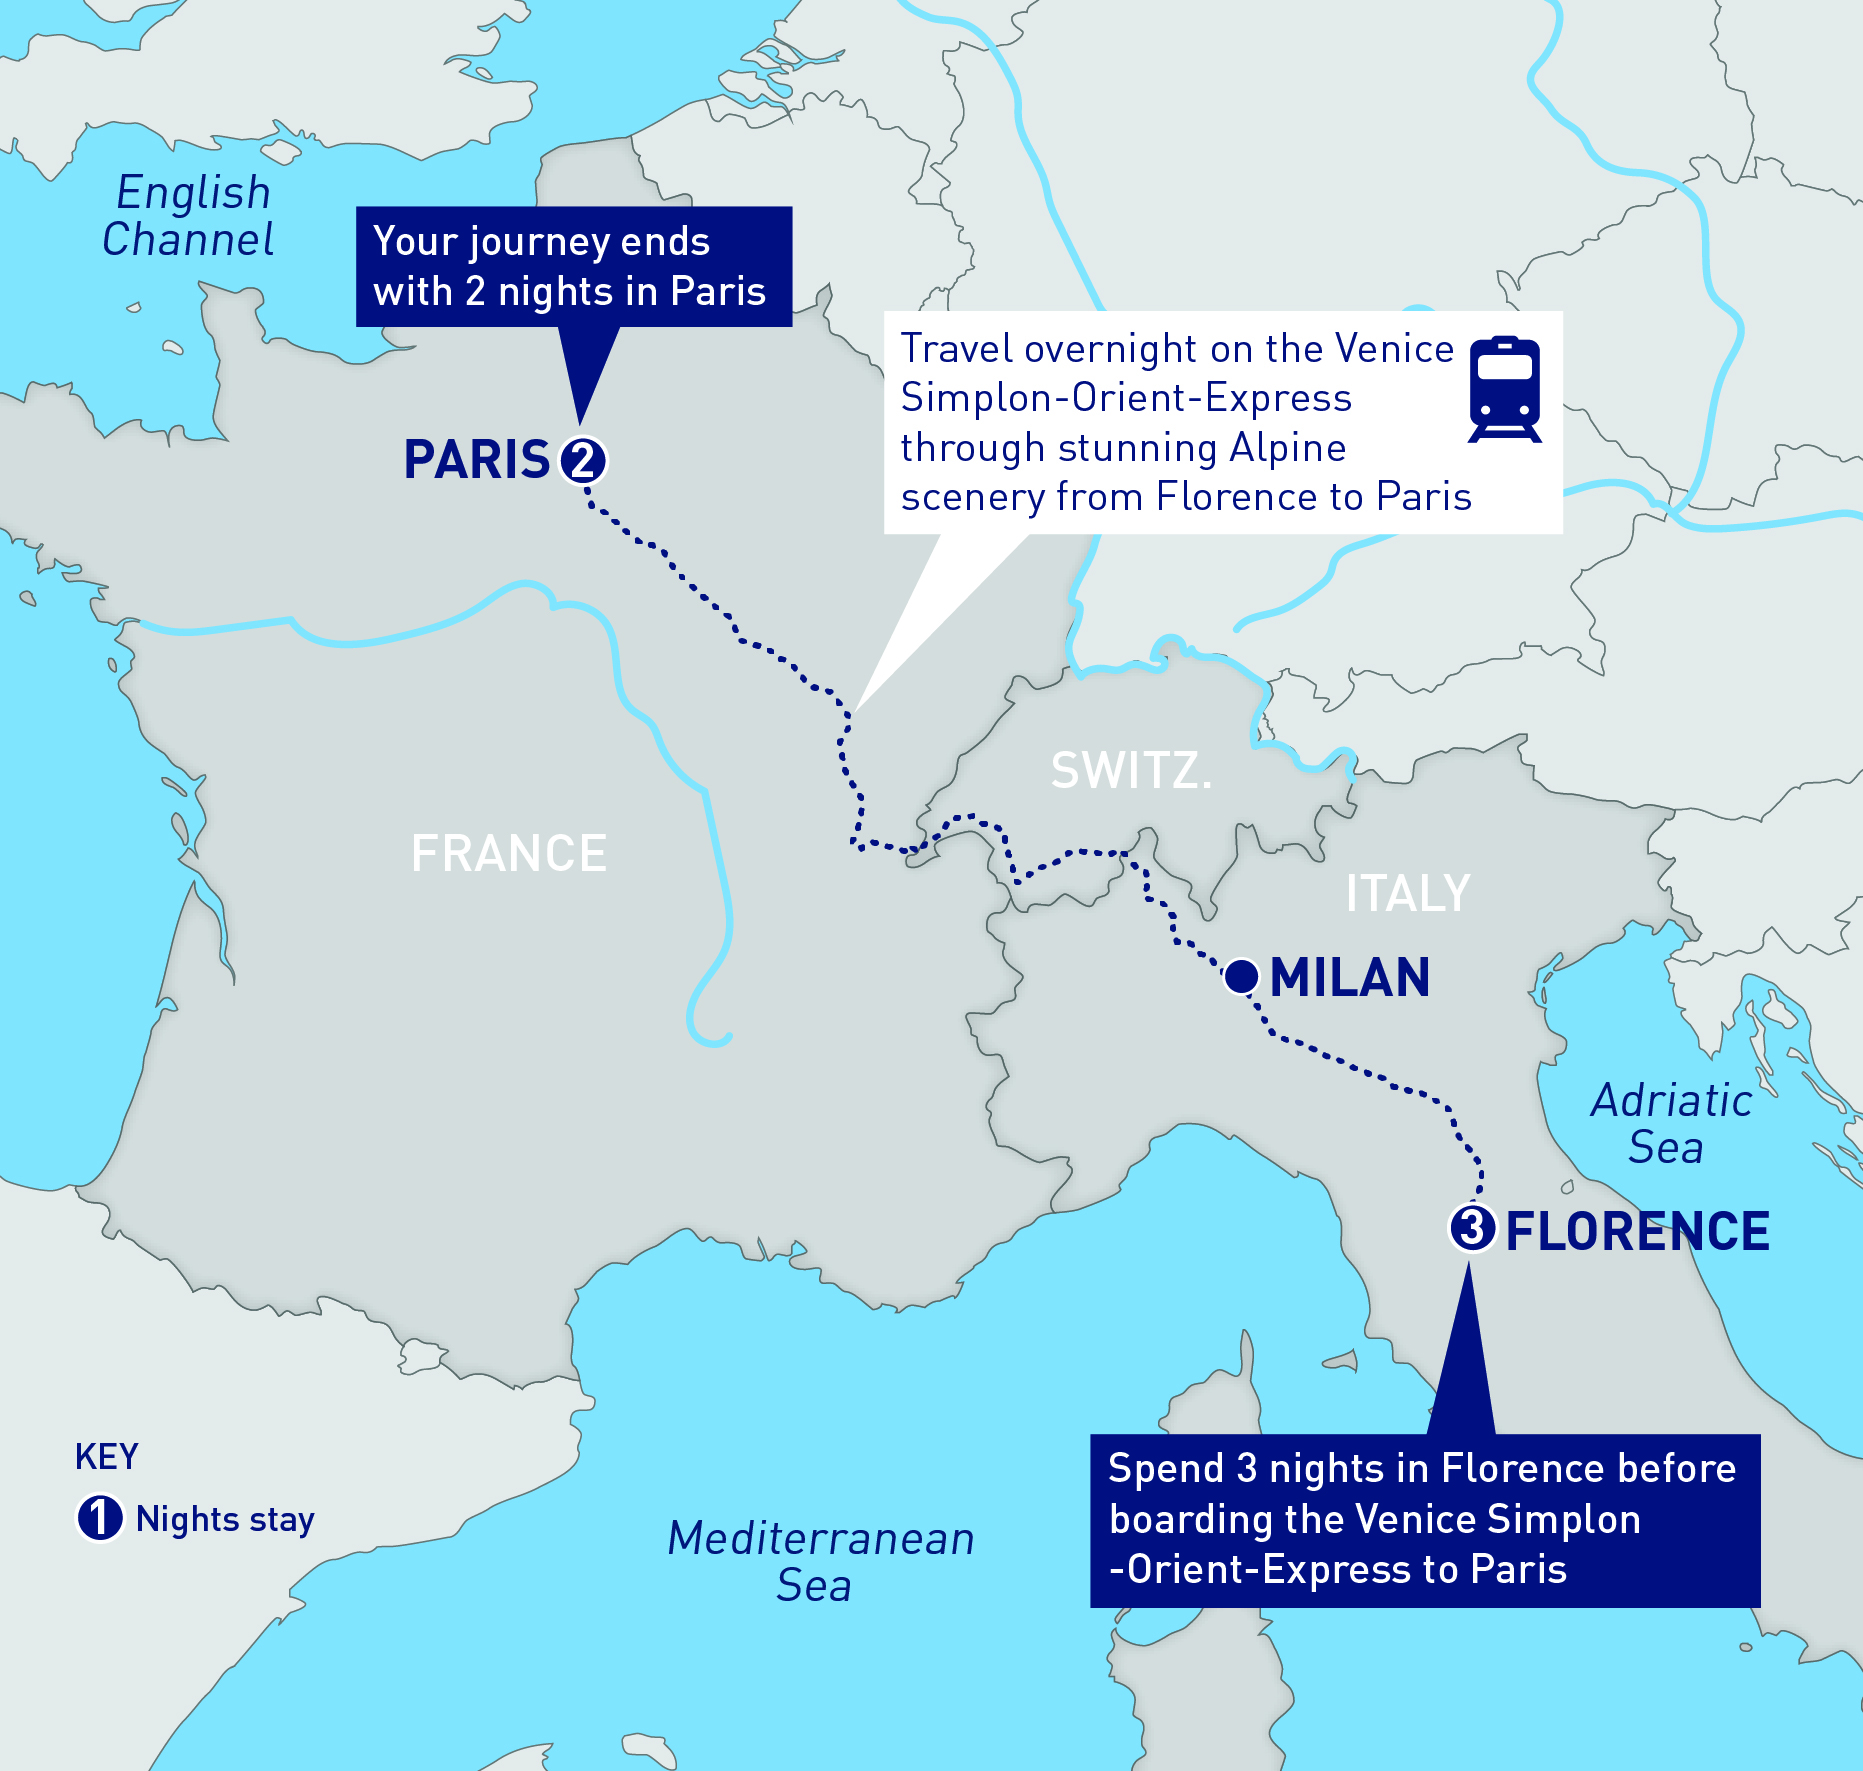 Florence to Paris on the Venice Simplon-Orient-Express